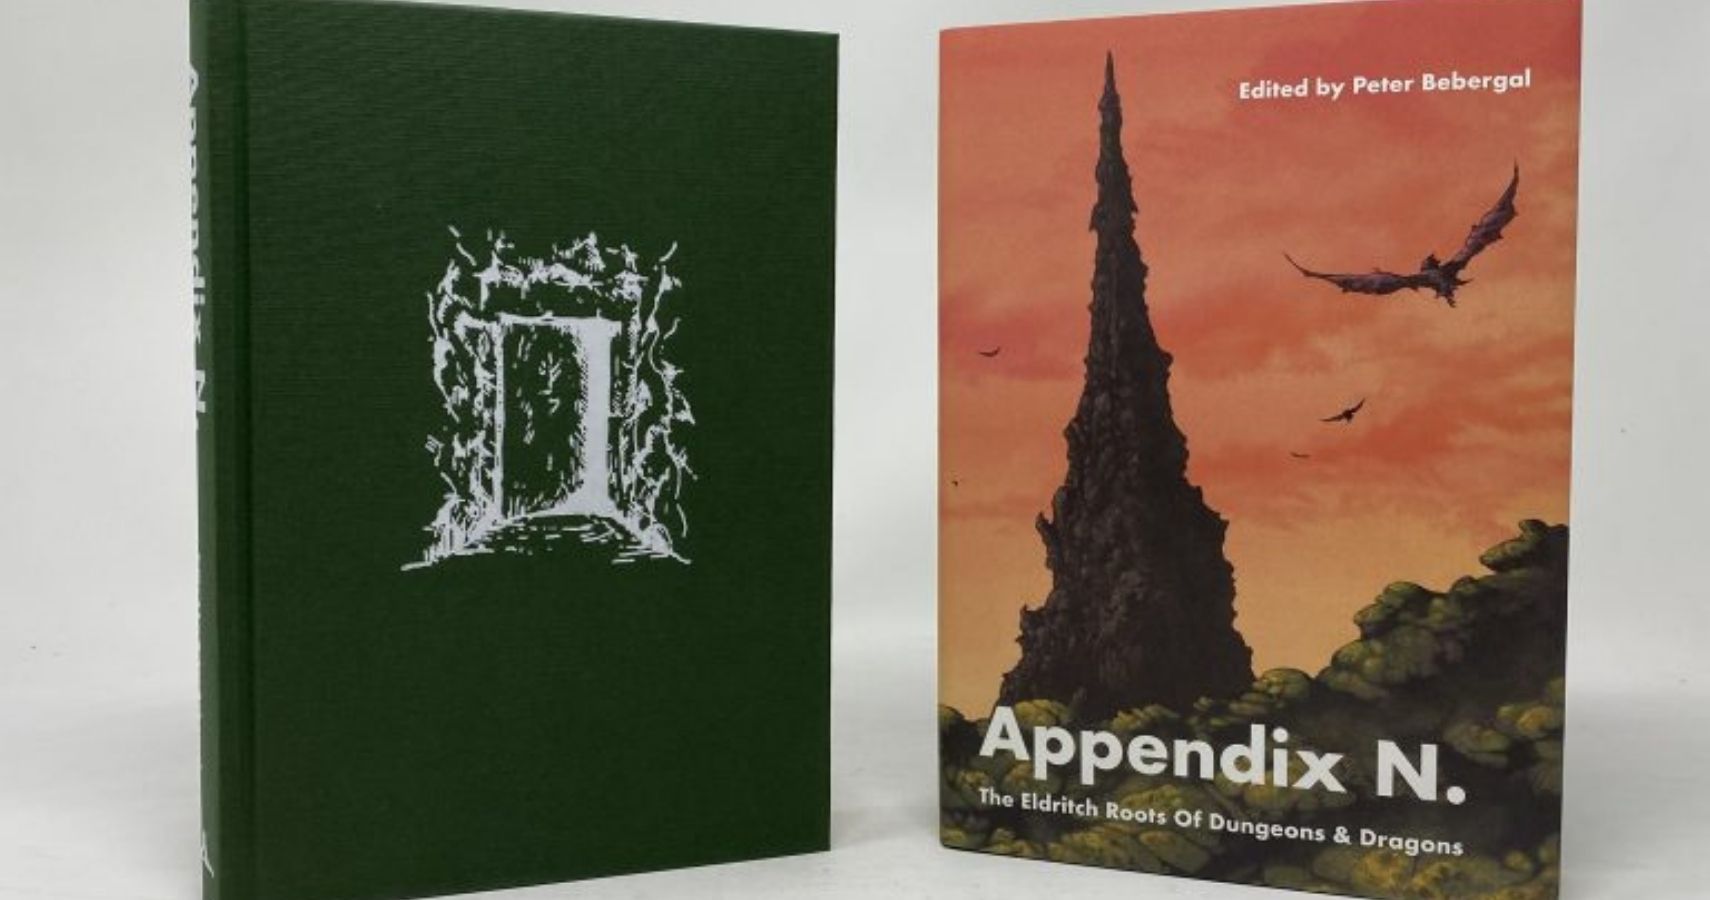 Appendix N Hardcover Edition Announcement feature image